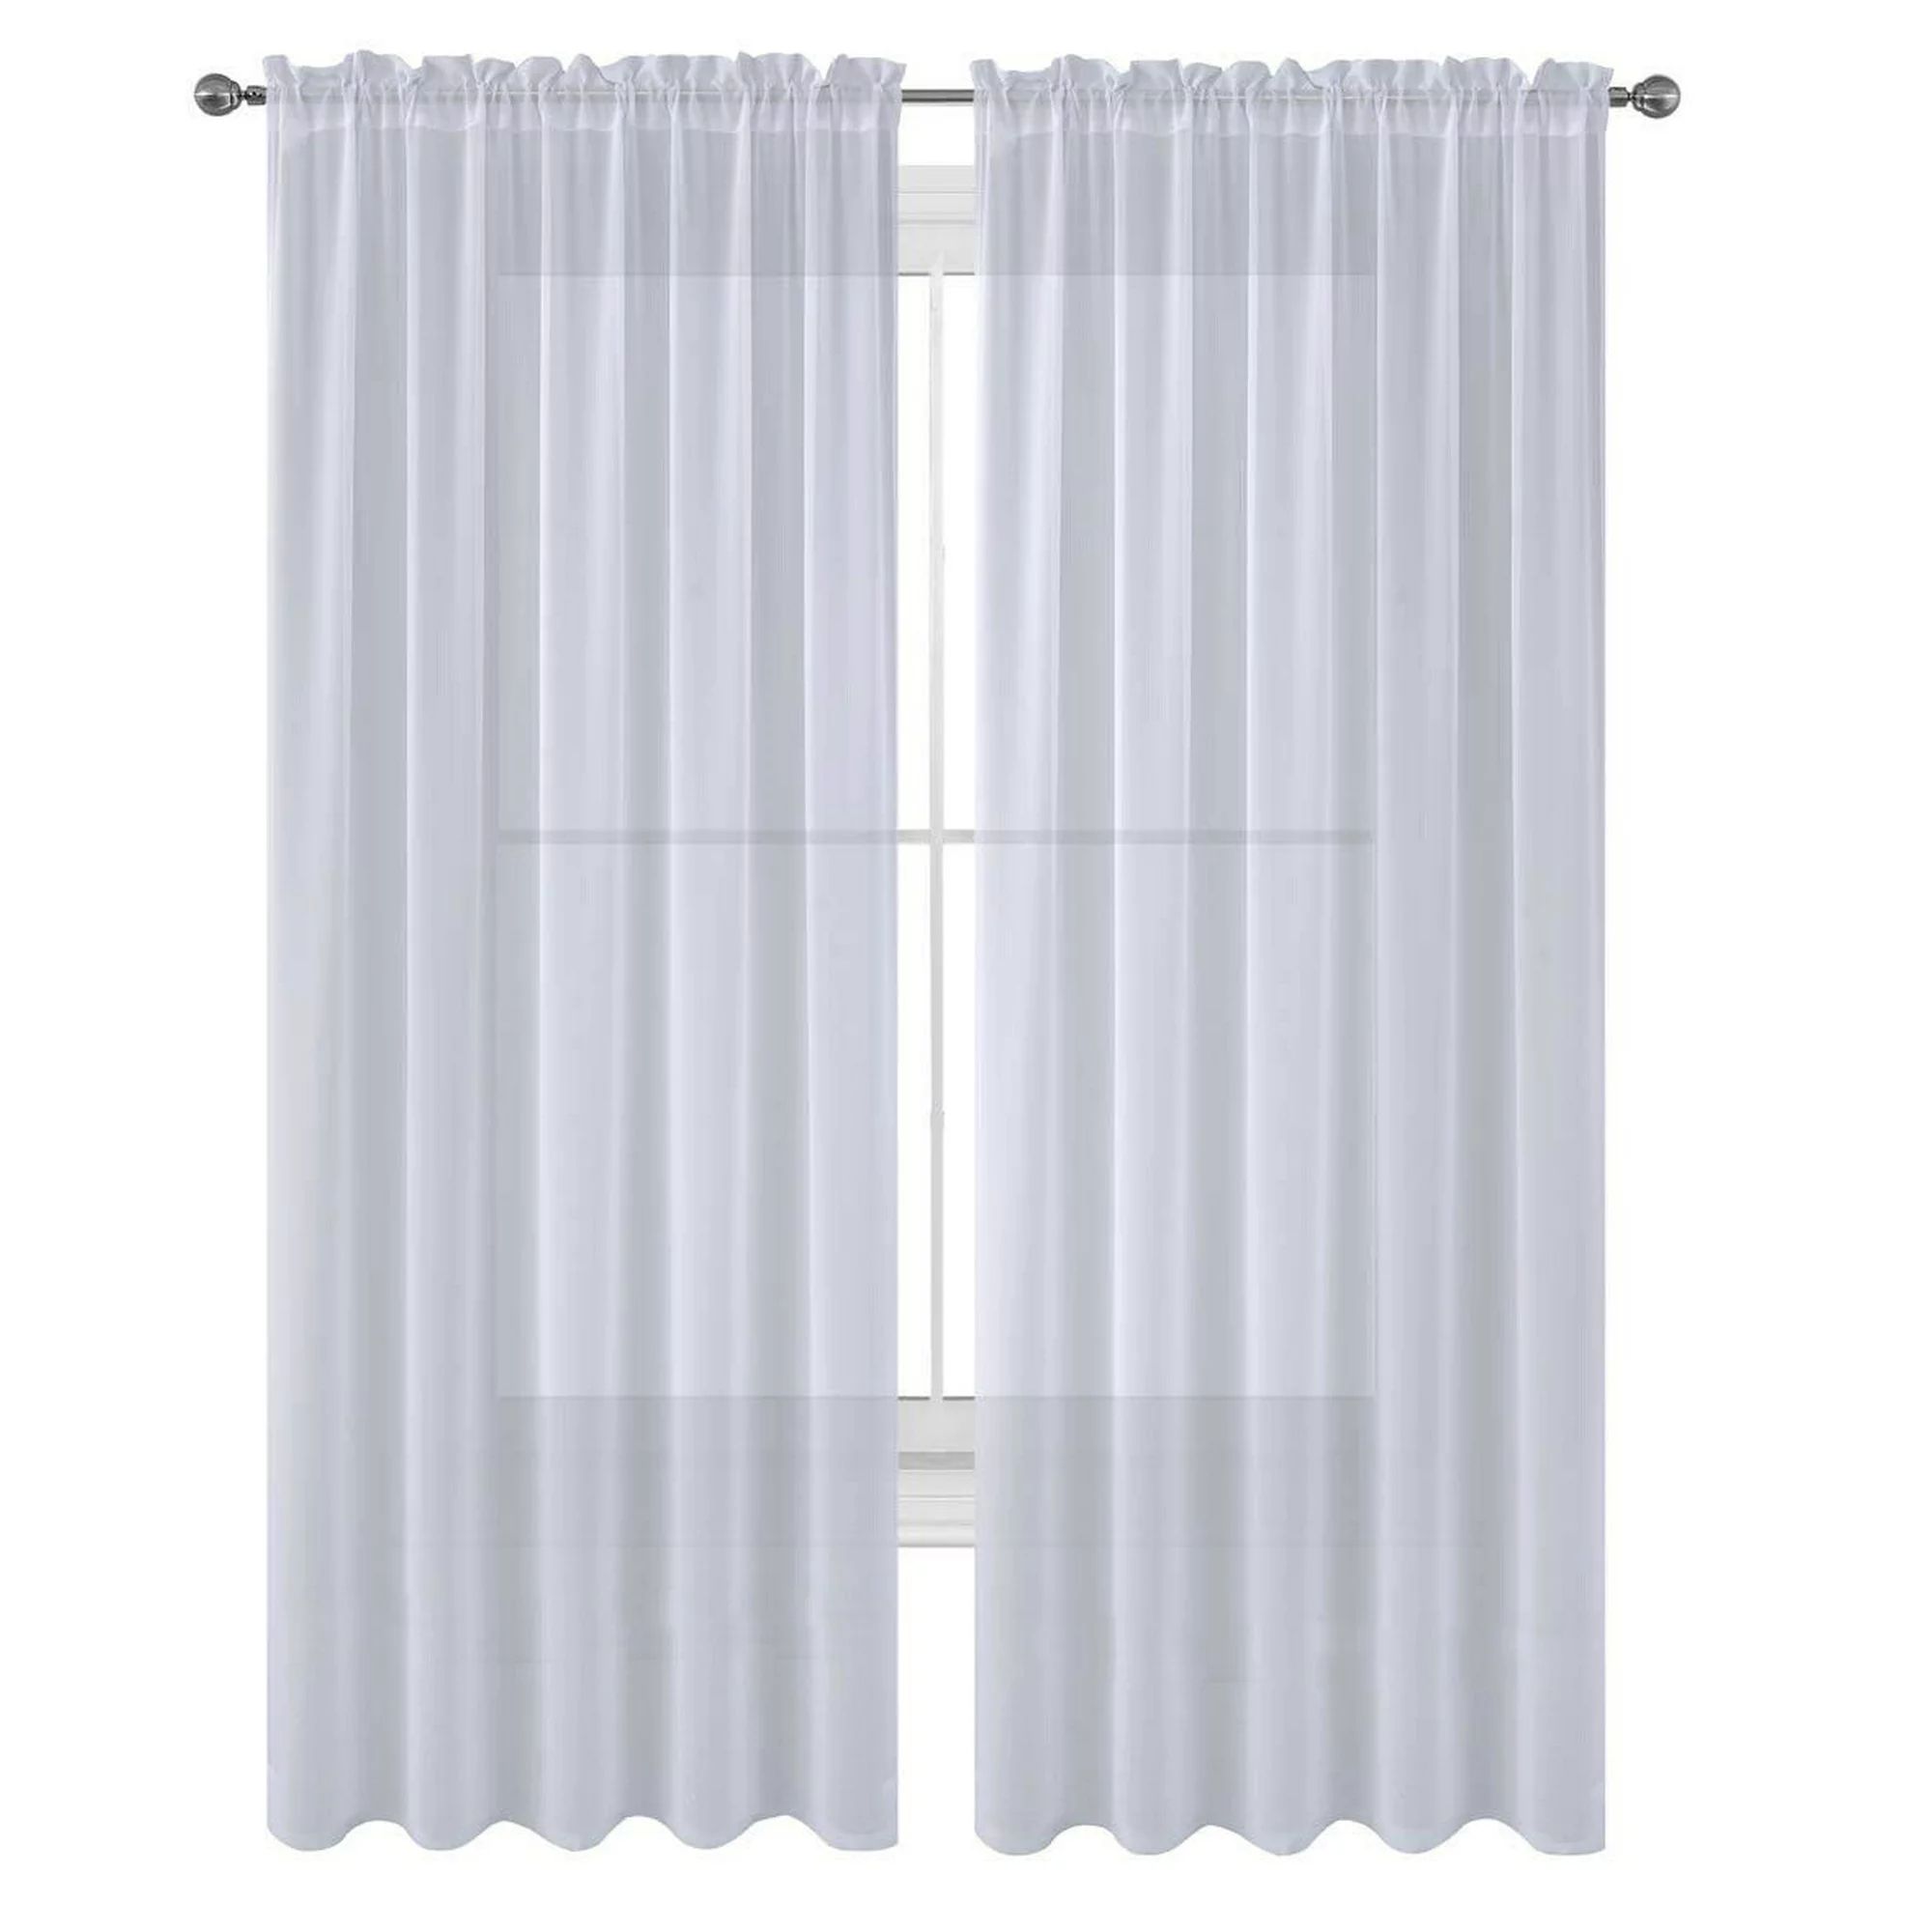 Decotex 2 Piece Elegant Solid Sheer Window Curtain Panels Treatment Drapes (55" X 63", White) | Walmart (US)